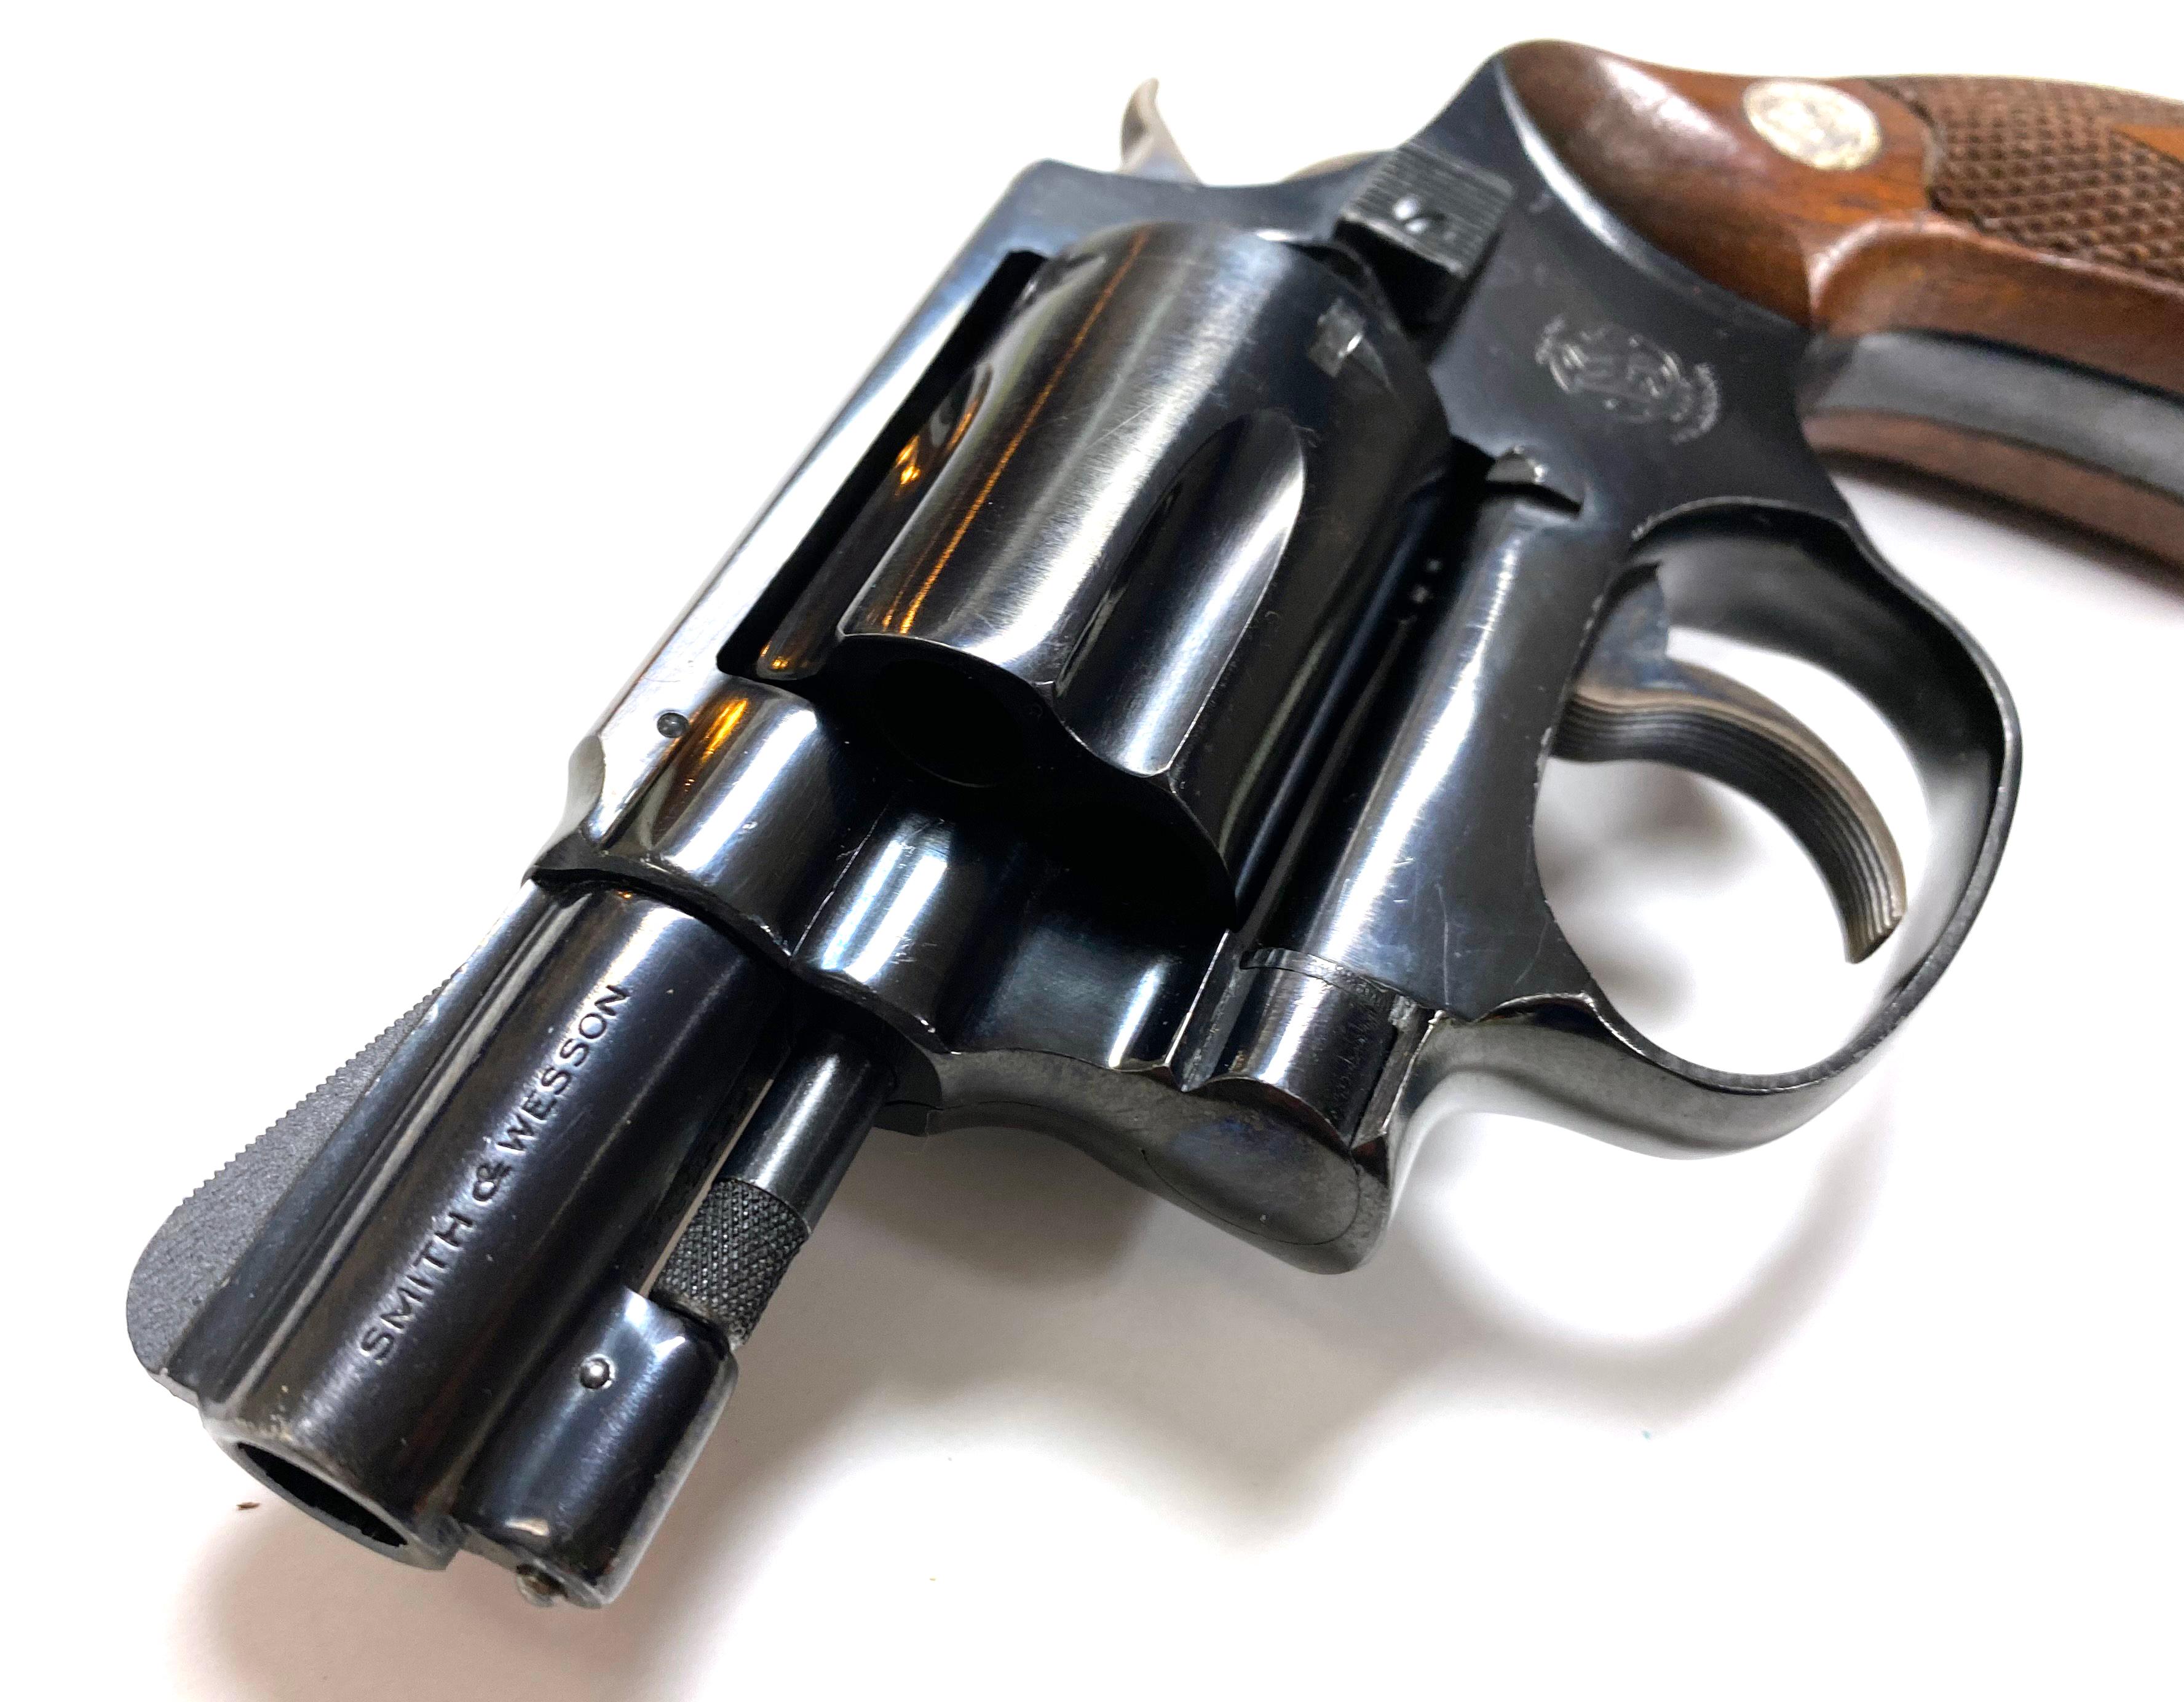 LNIB 1955 Smith & Wesson .38 Chiefs Special 2” Blue Revolver w/ Early Flat Latch & Diamond Grips